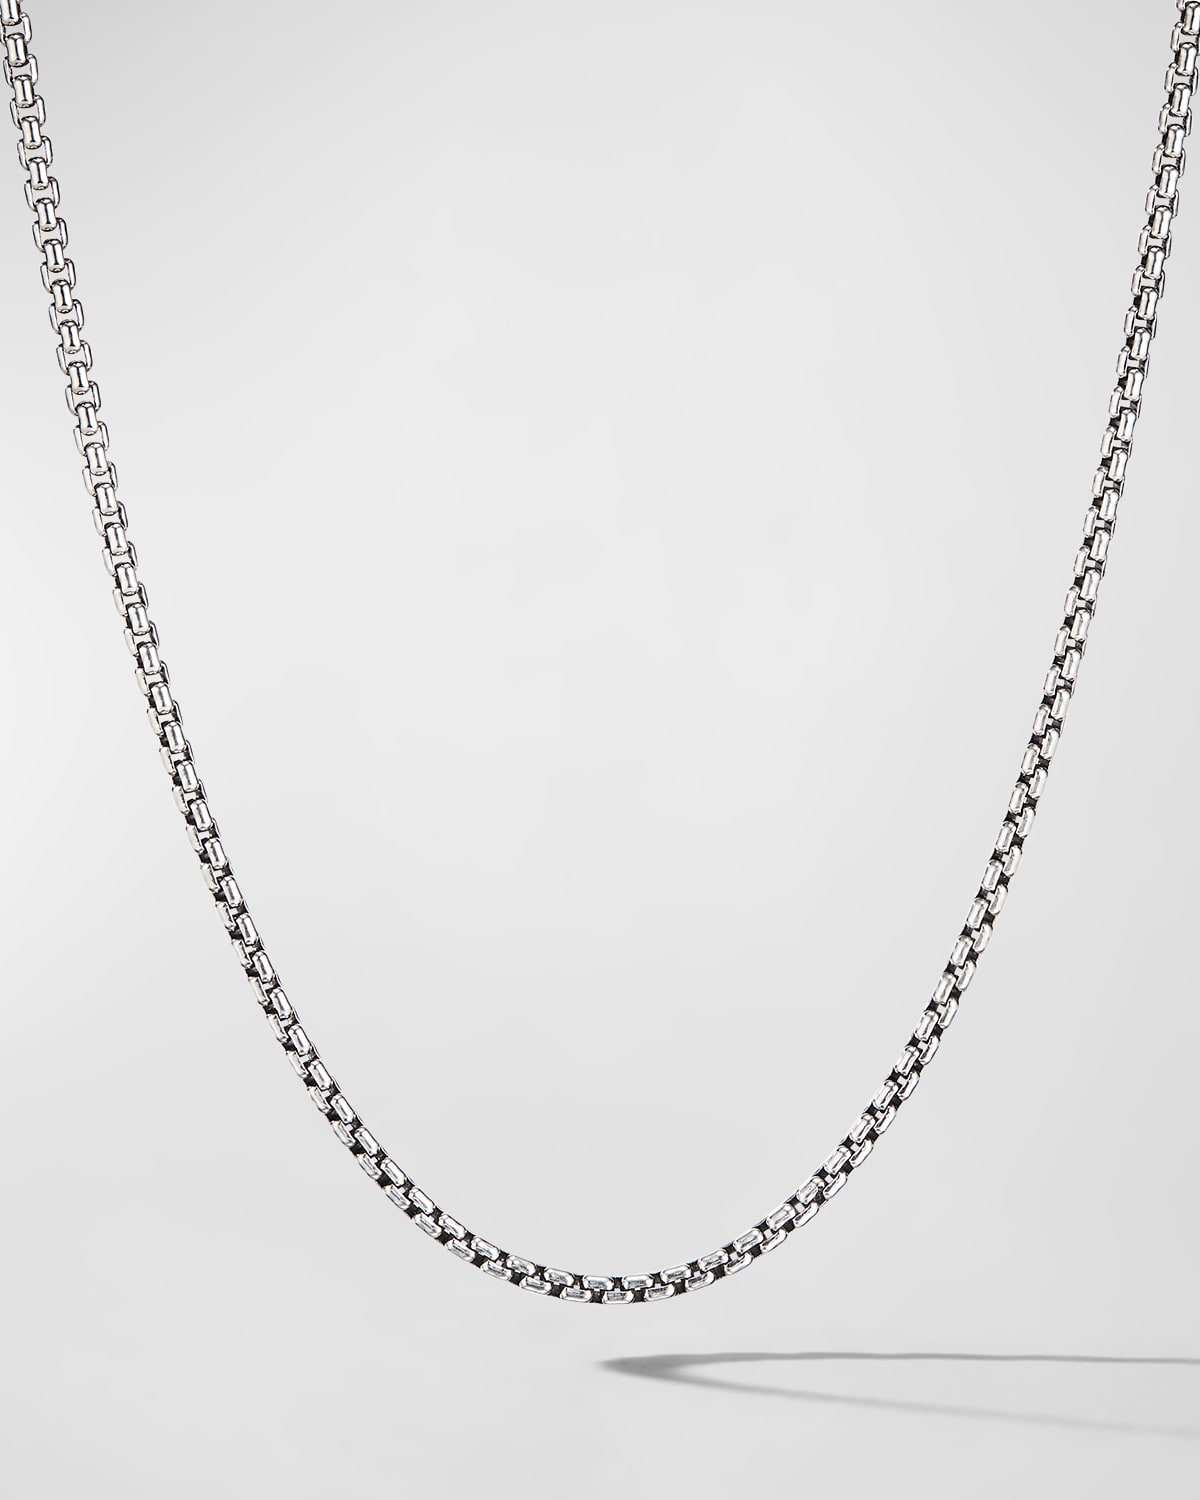 Men's Box Chain Necklace in Silver, 2.7mm, 26"L